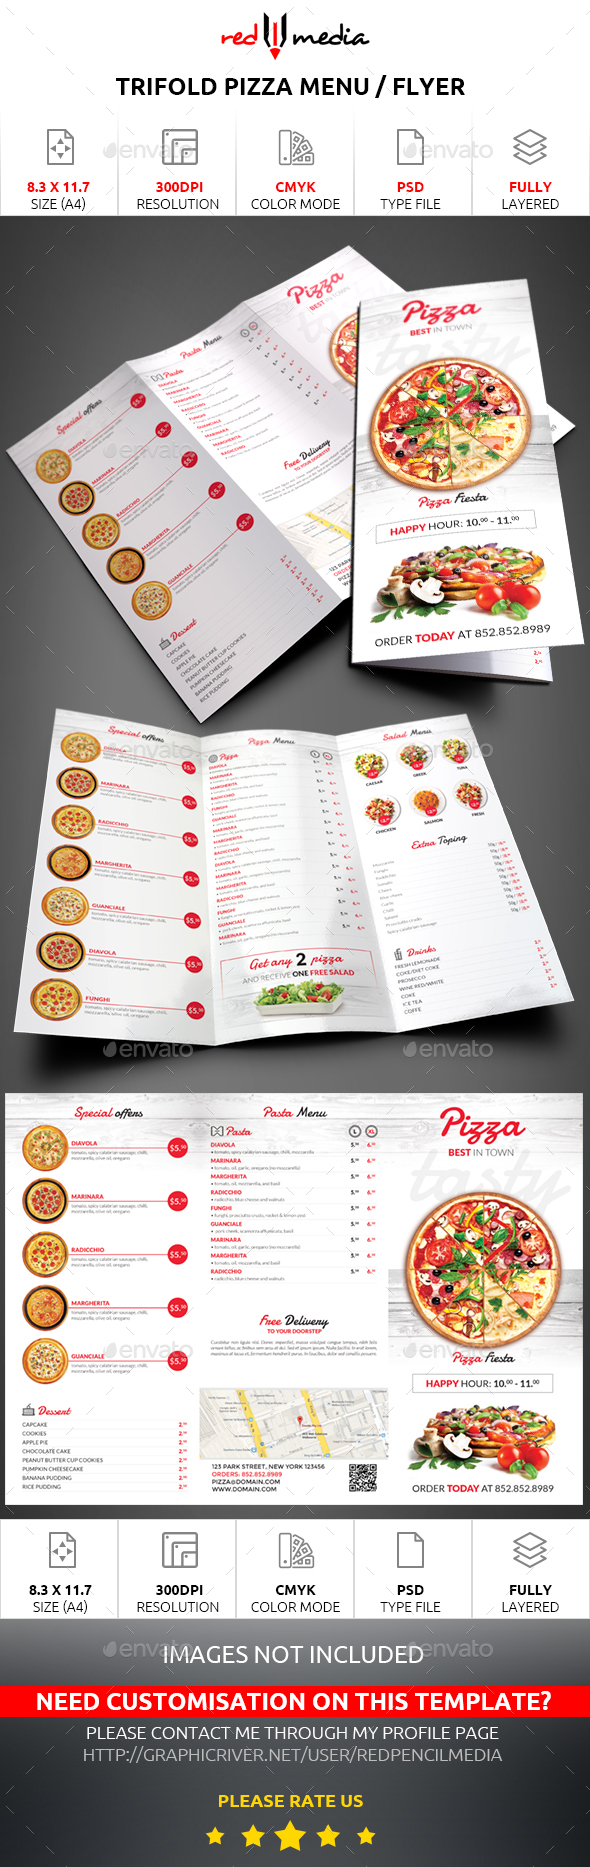 Trifold Pizza Menu / Flyer